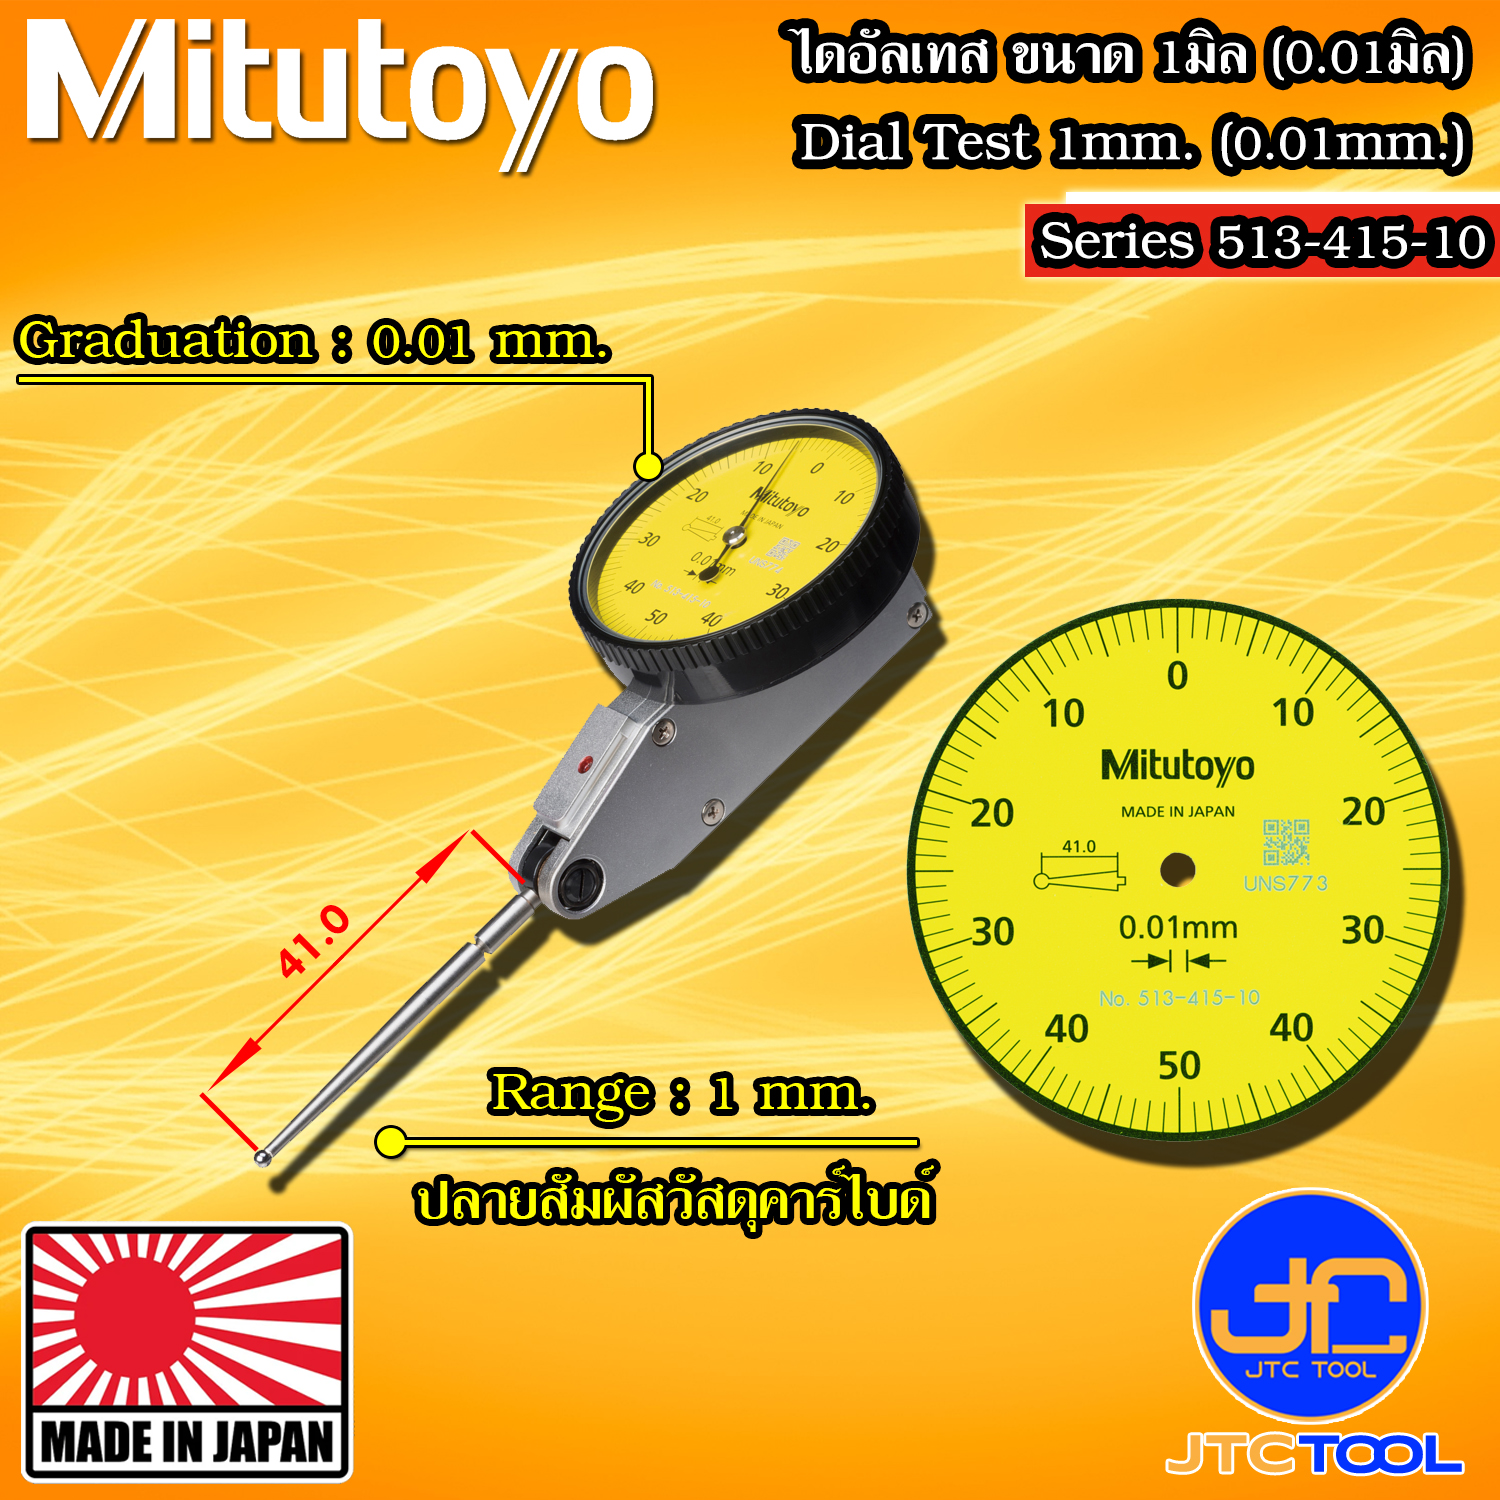 Mitutoyo ไดอัลเทส ความละเอียด 0.01มิล ระยะวัด 1มิล รุ่น 513-415-10 - Dial  Test Indicator Horizontal Type Series 513-415-10 - JTC TOOL  ศูนย์รวมจำหน่ายเครื่องมืออุตสาหกรรมและเครื่องมือช่างคุณภาพสูง